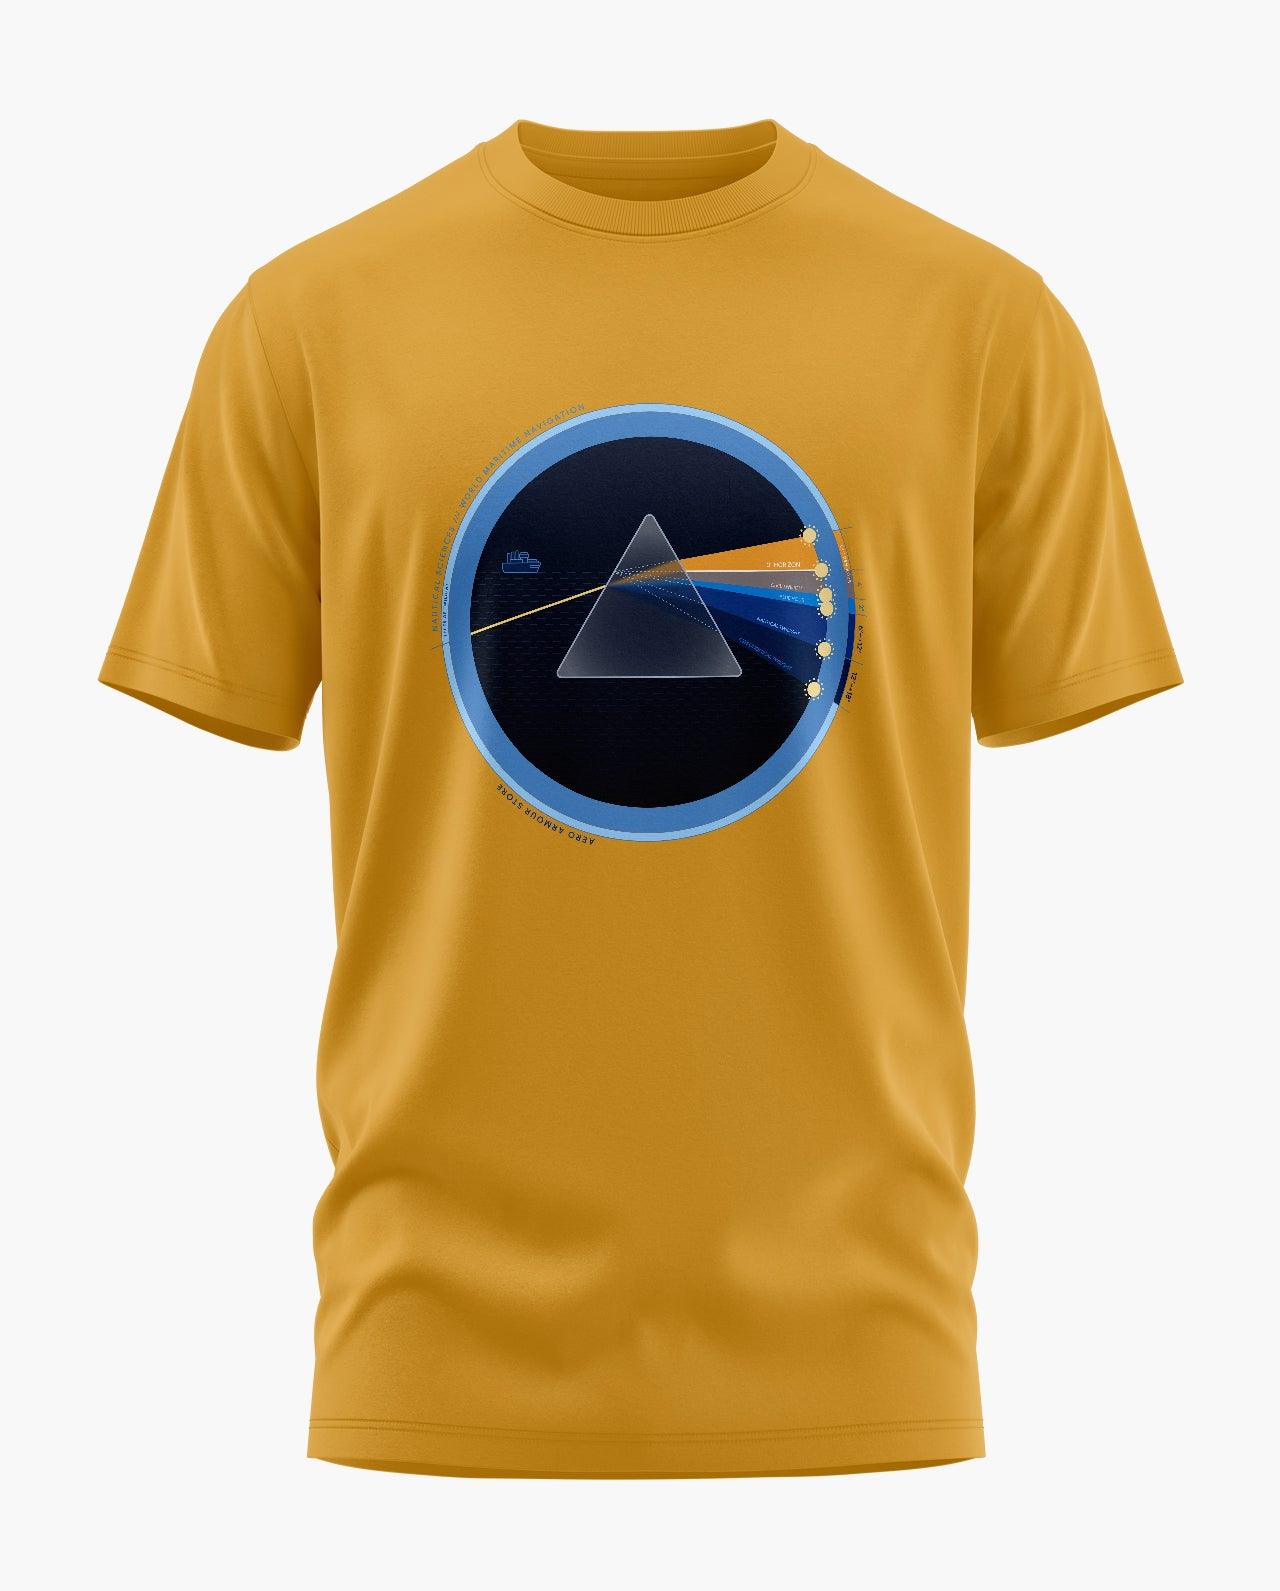 Twilight Prism T-Shirt - Aero Armour